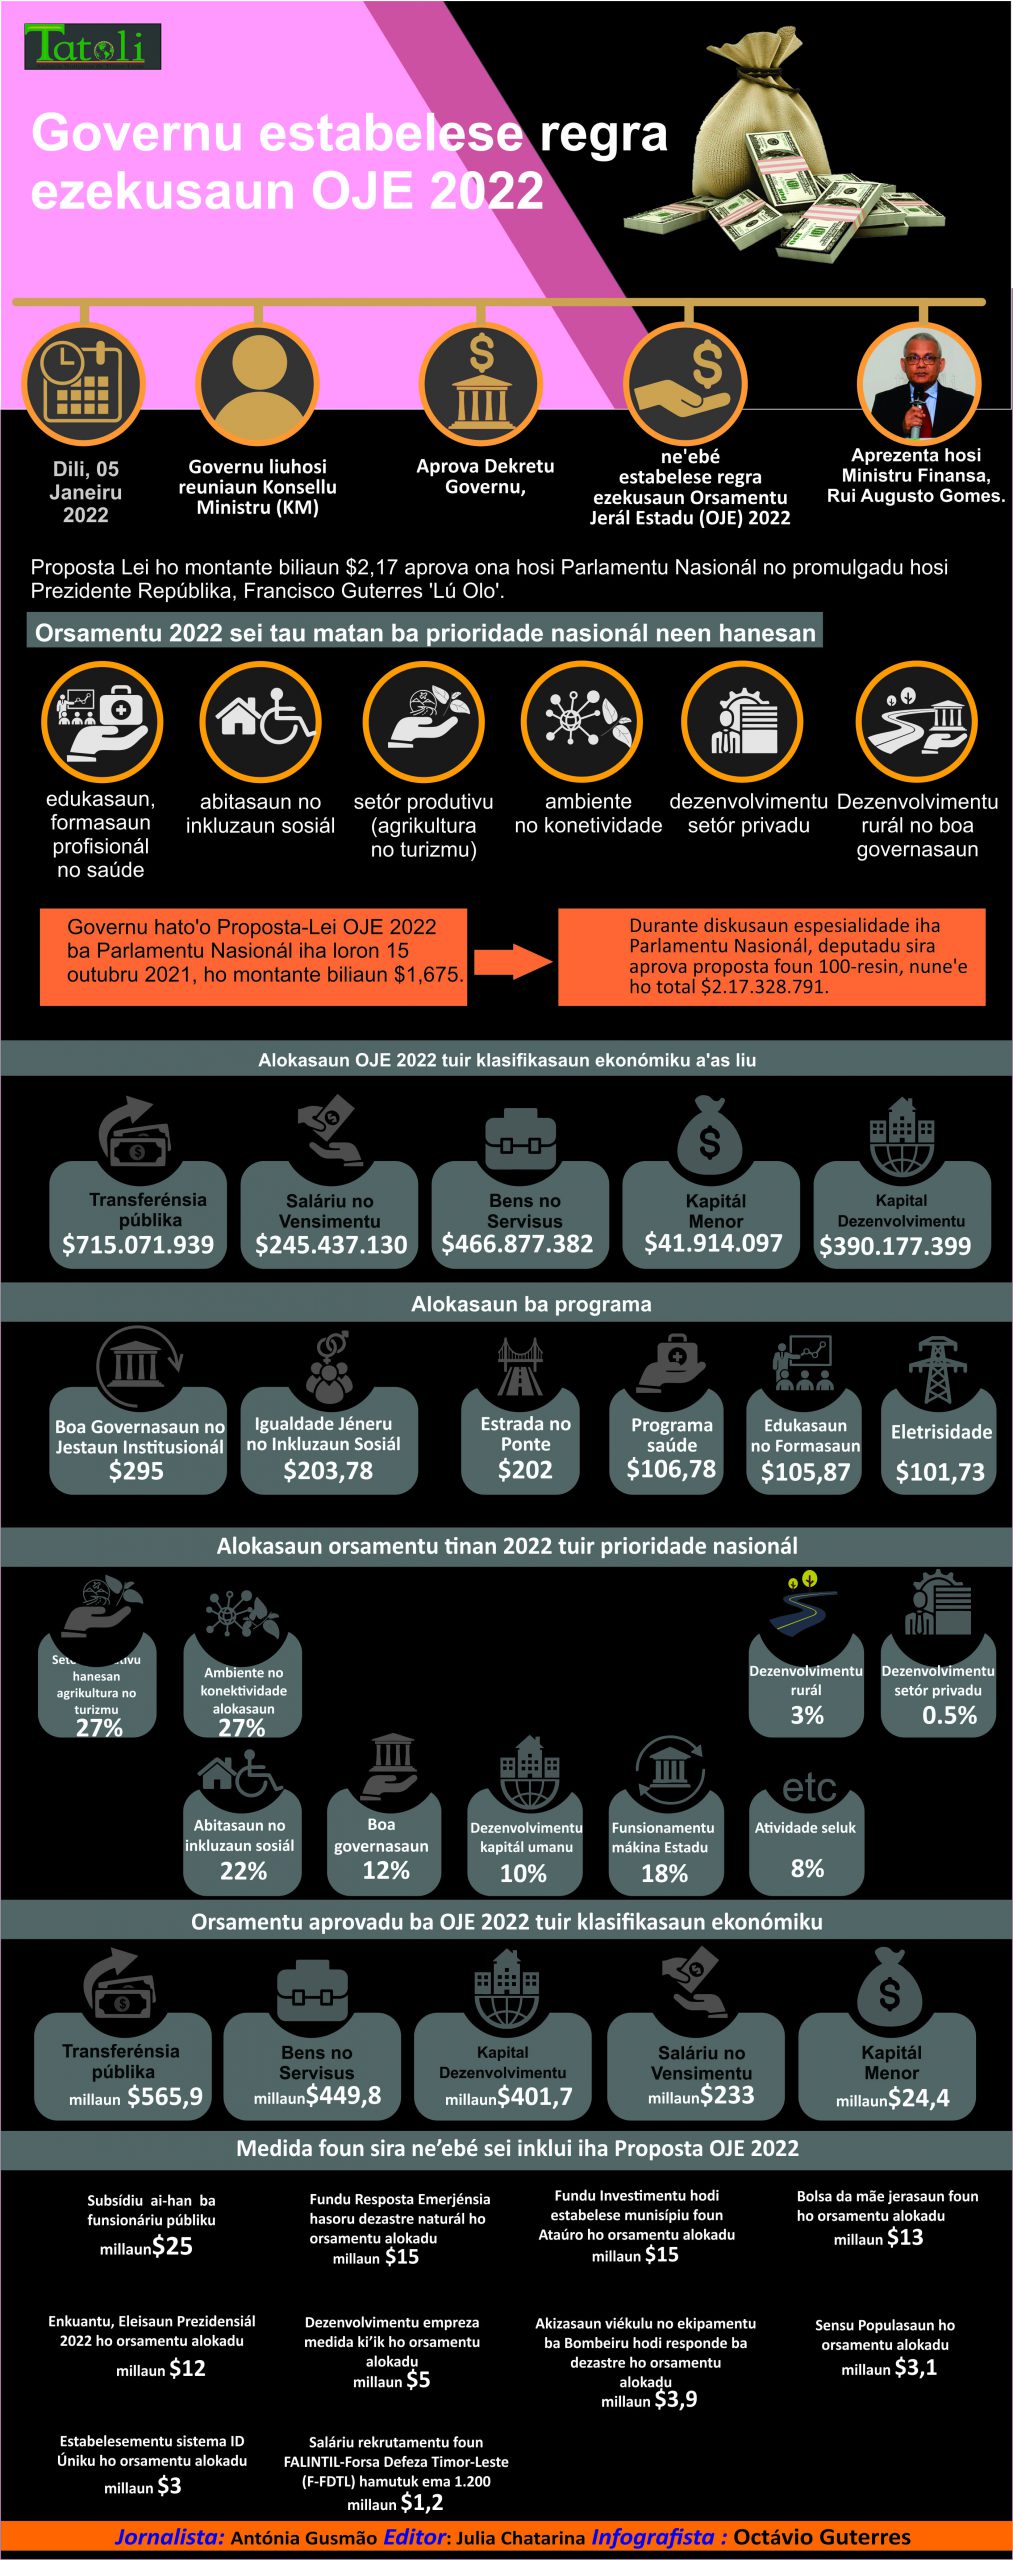 Infografia: Governu estabelese regra  ezekusaun OJE 2022